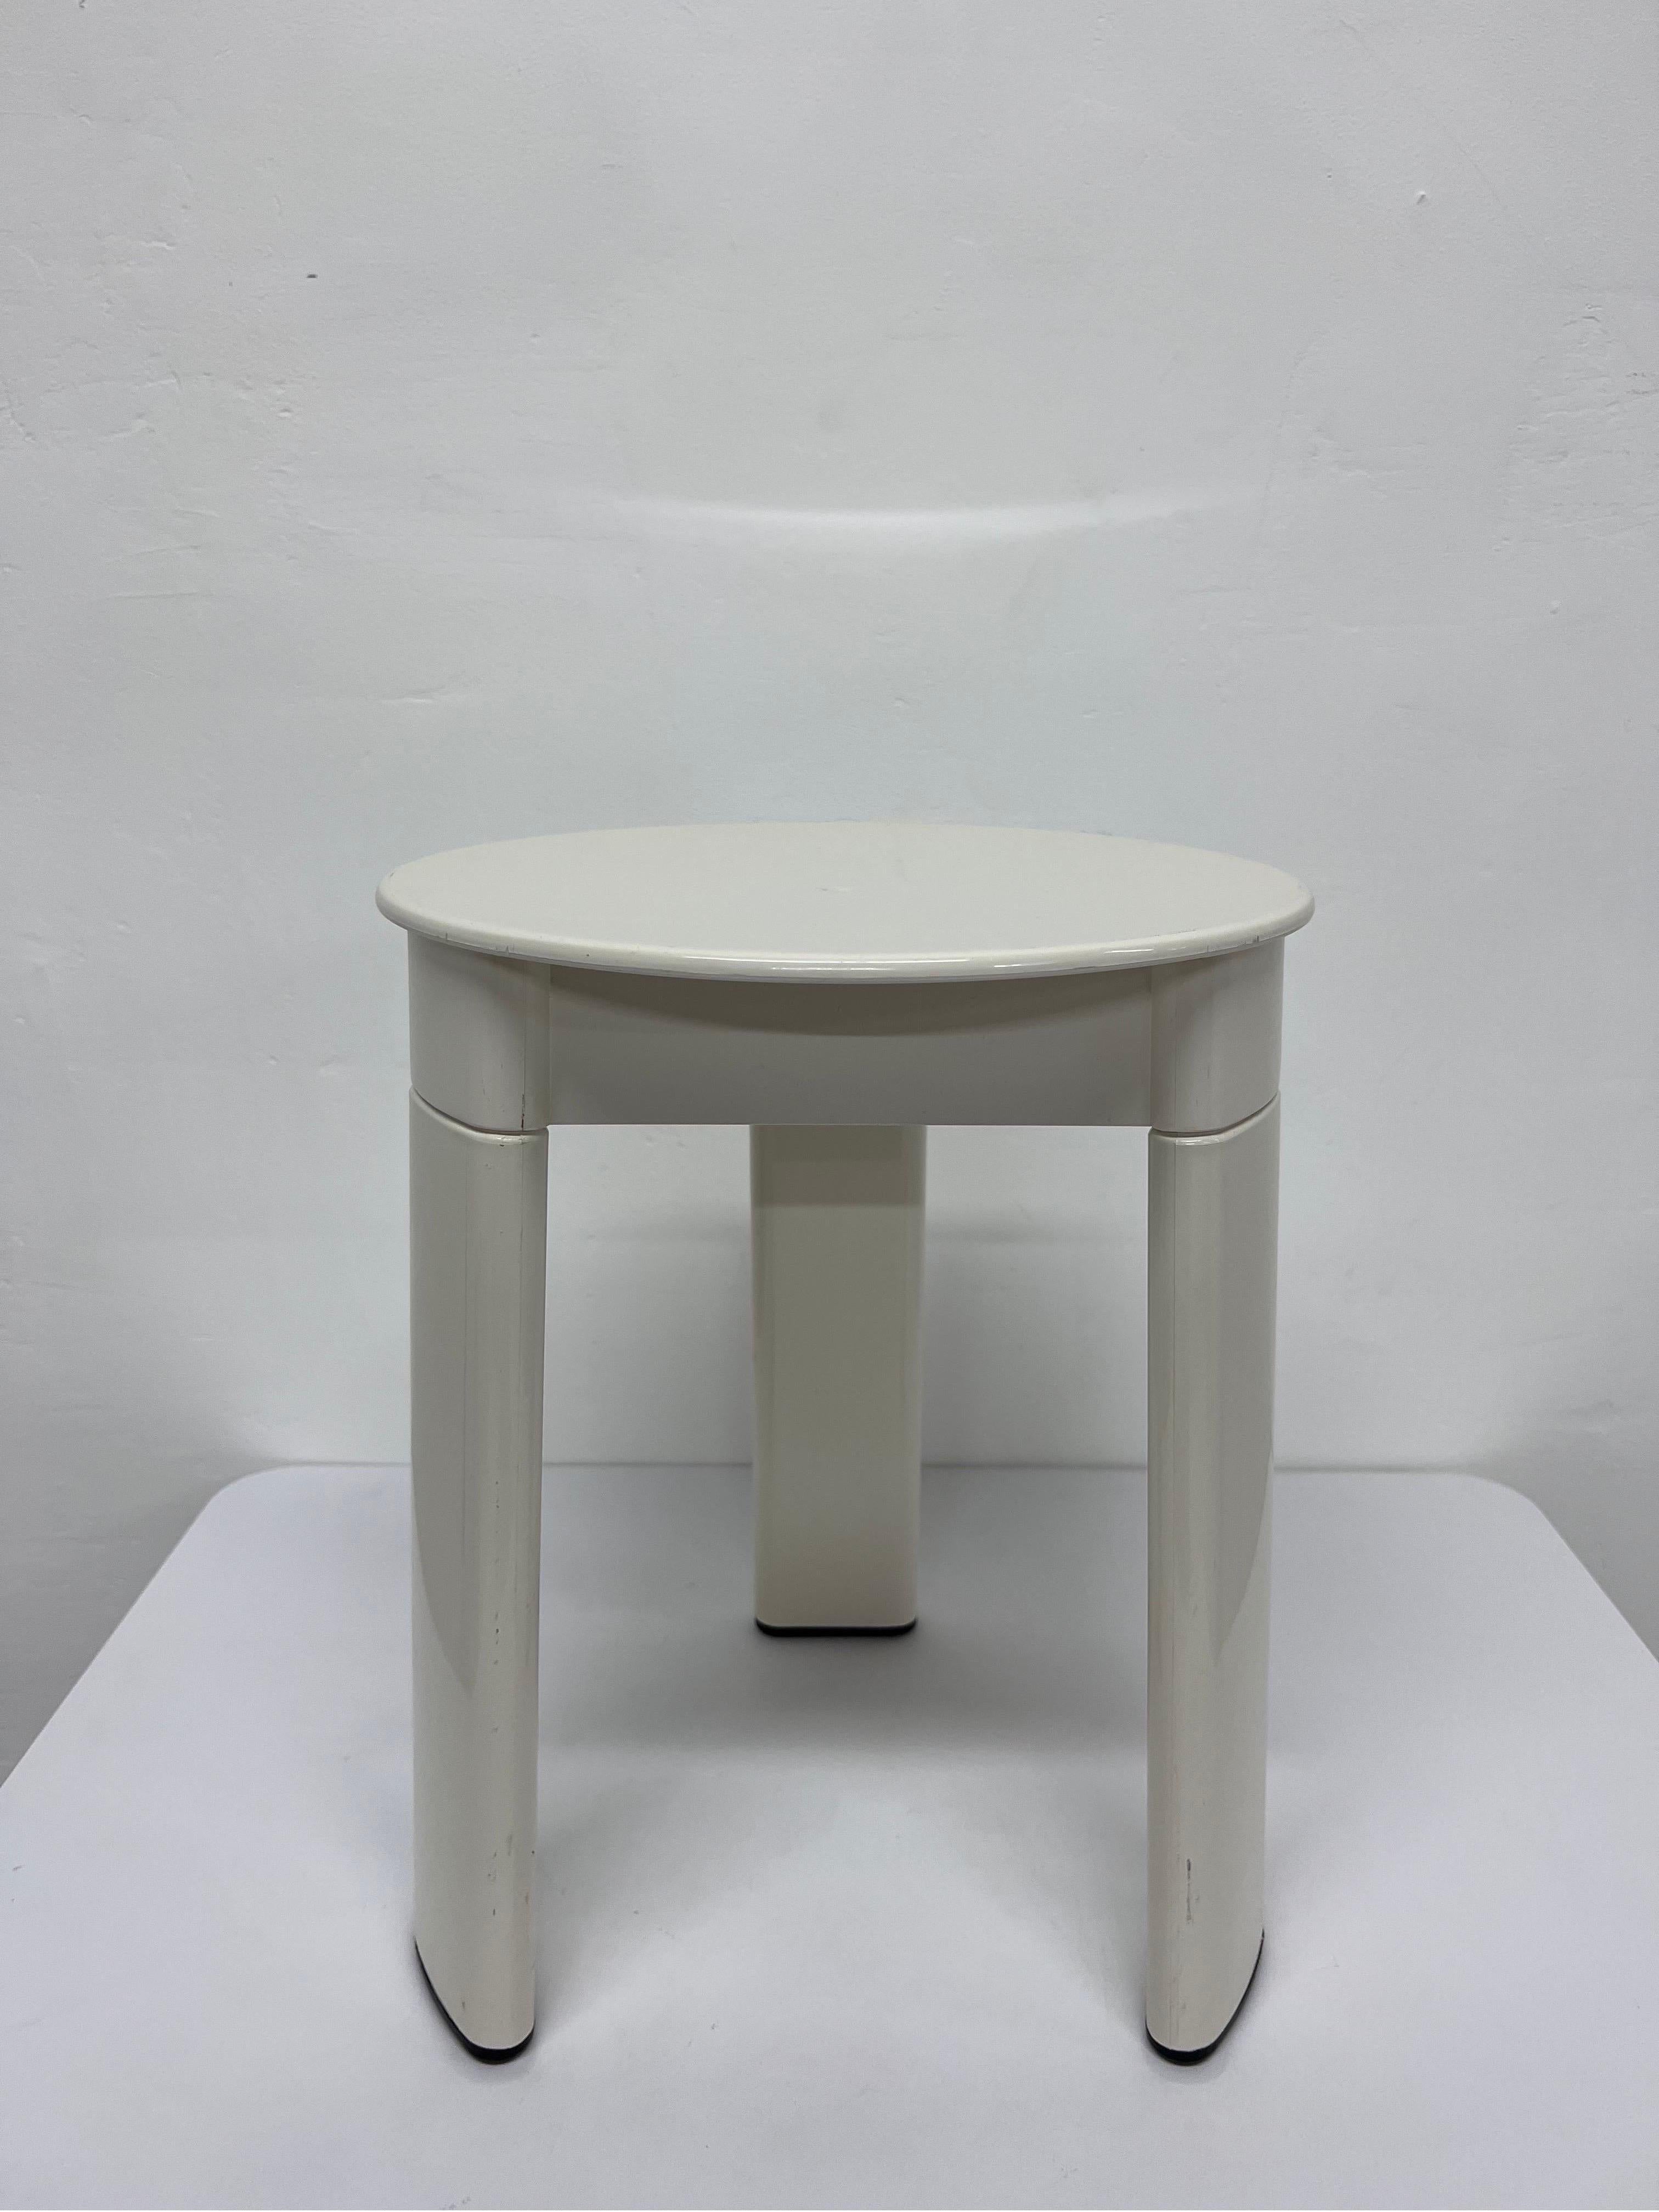 Three-legged plastic Trio stool / side table designed by Olaf Von Bohr for Gedy.

Top diameter: 12-1/2